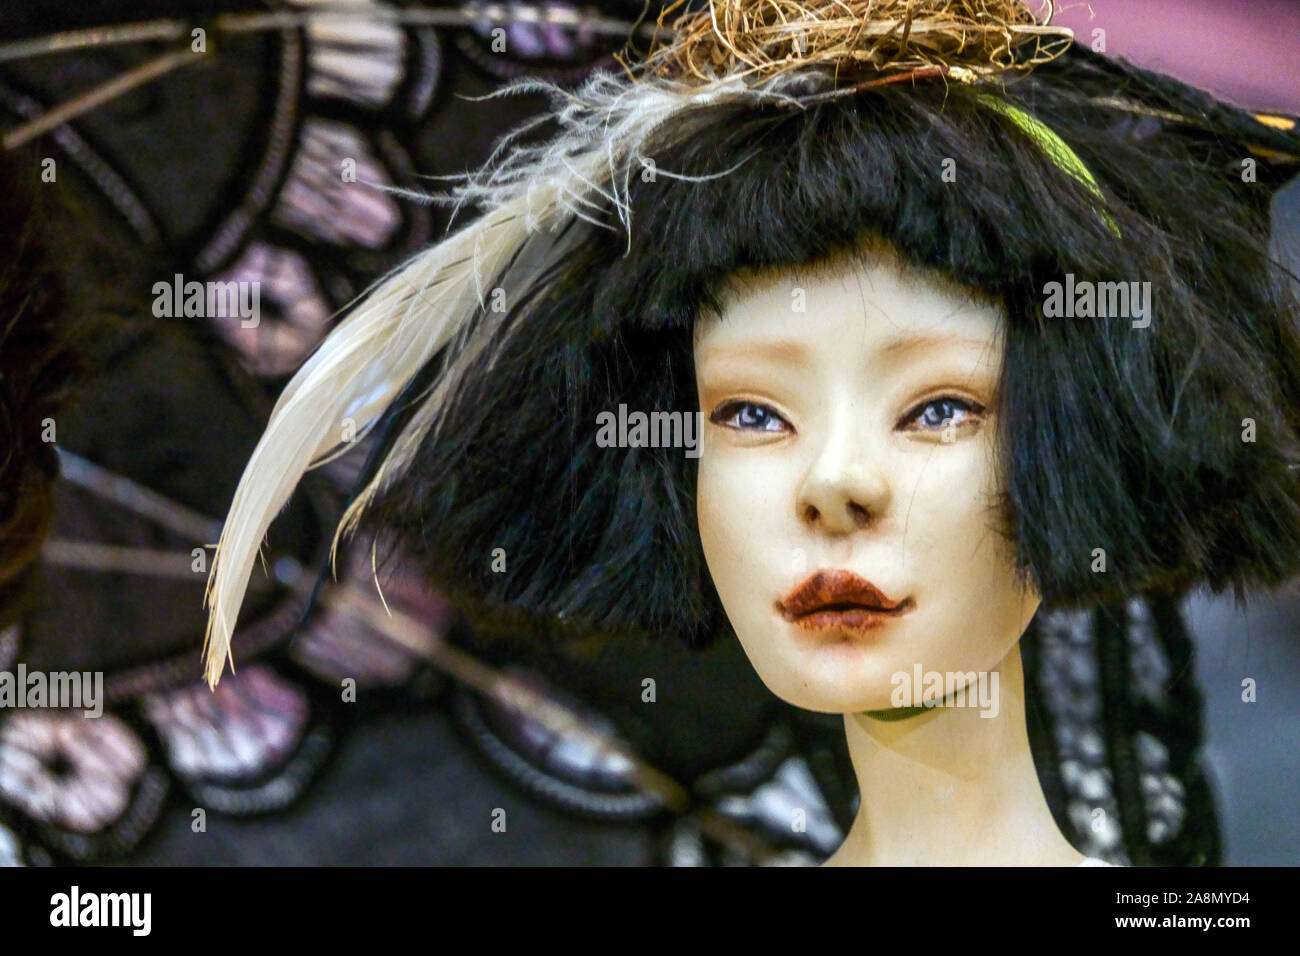 Art doll Asian style, face Stock Photo